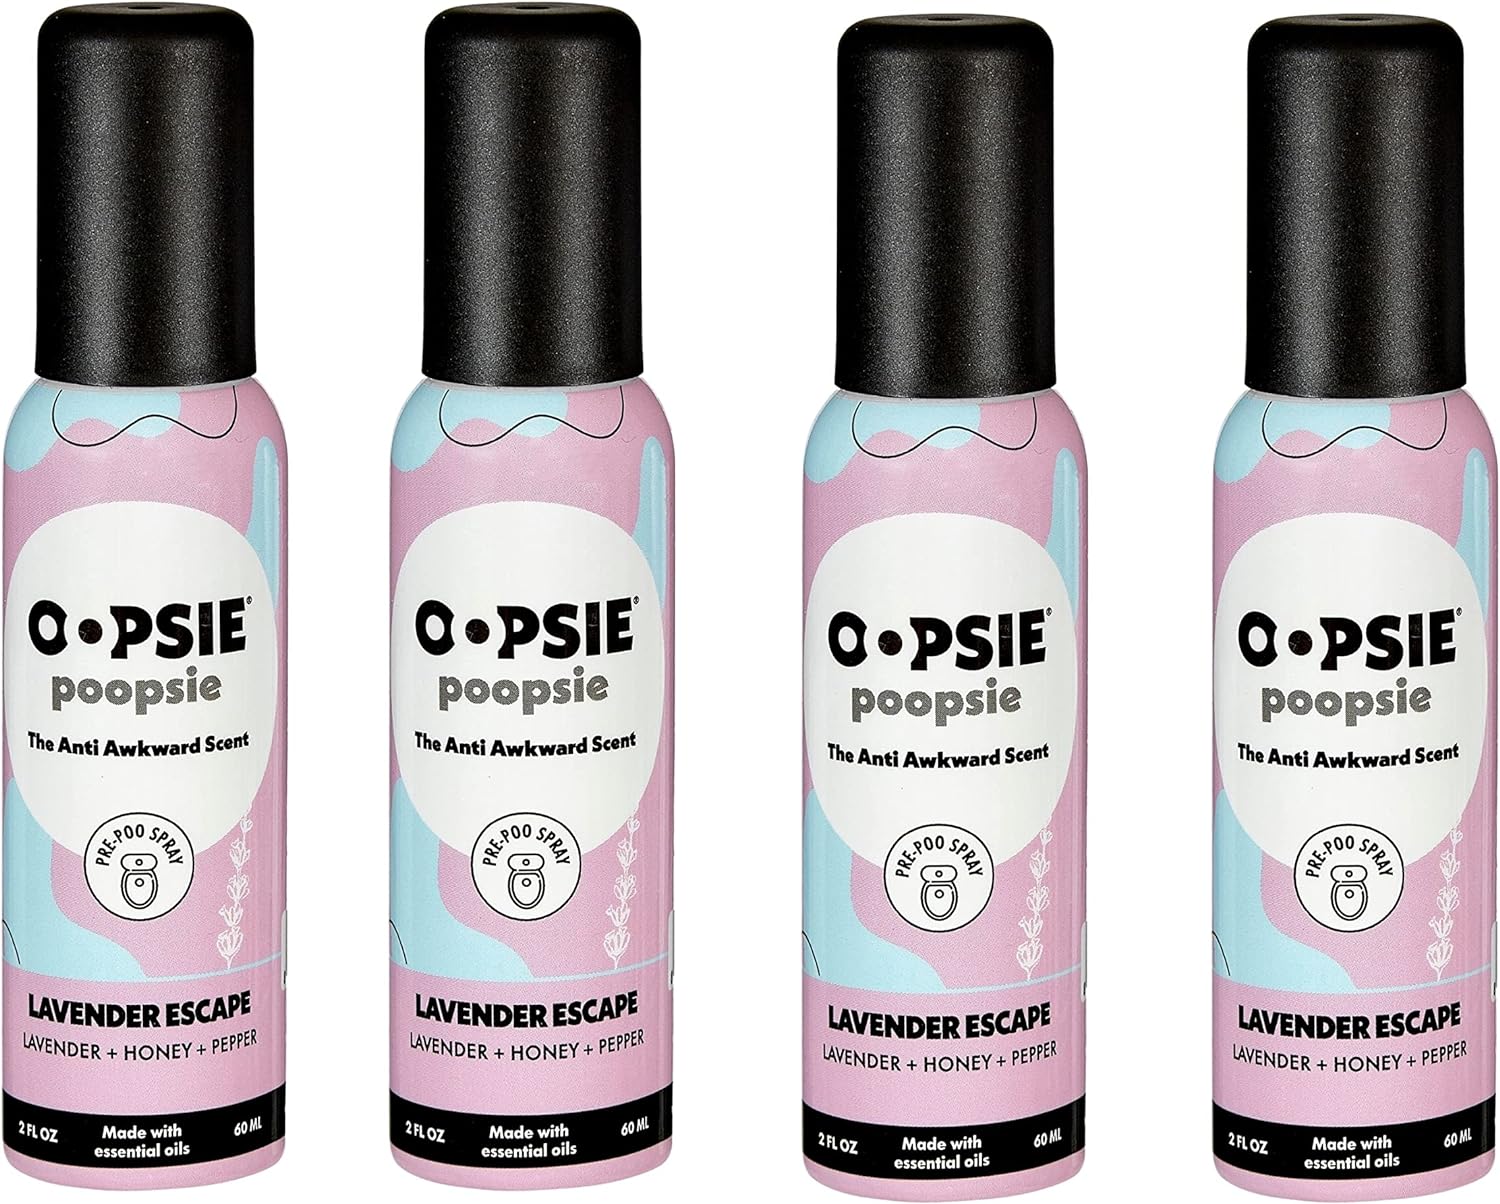 Oopsie Poopsie Pre Poop Spray - 4 Pack Lavender Scape, Natural Pre Poo Toilet Spray for Bathrooms, Trap Odors & Eliminate Embarrassment, 2oz Travel Size Pre Poo Air Freshener Spray : Health & Household